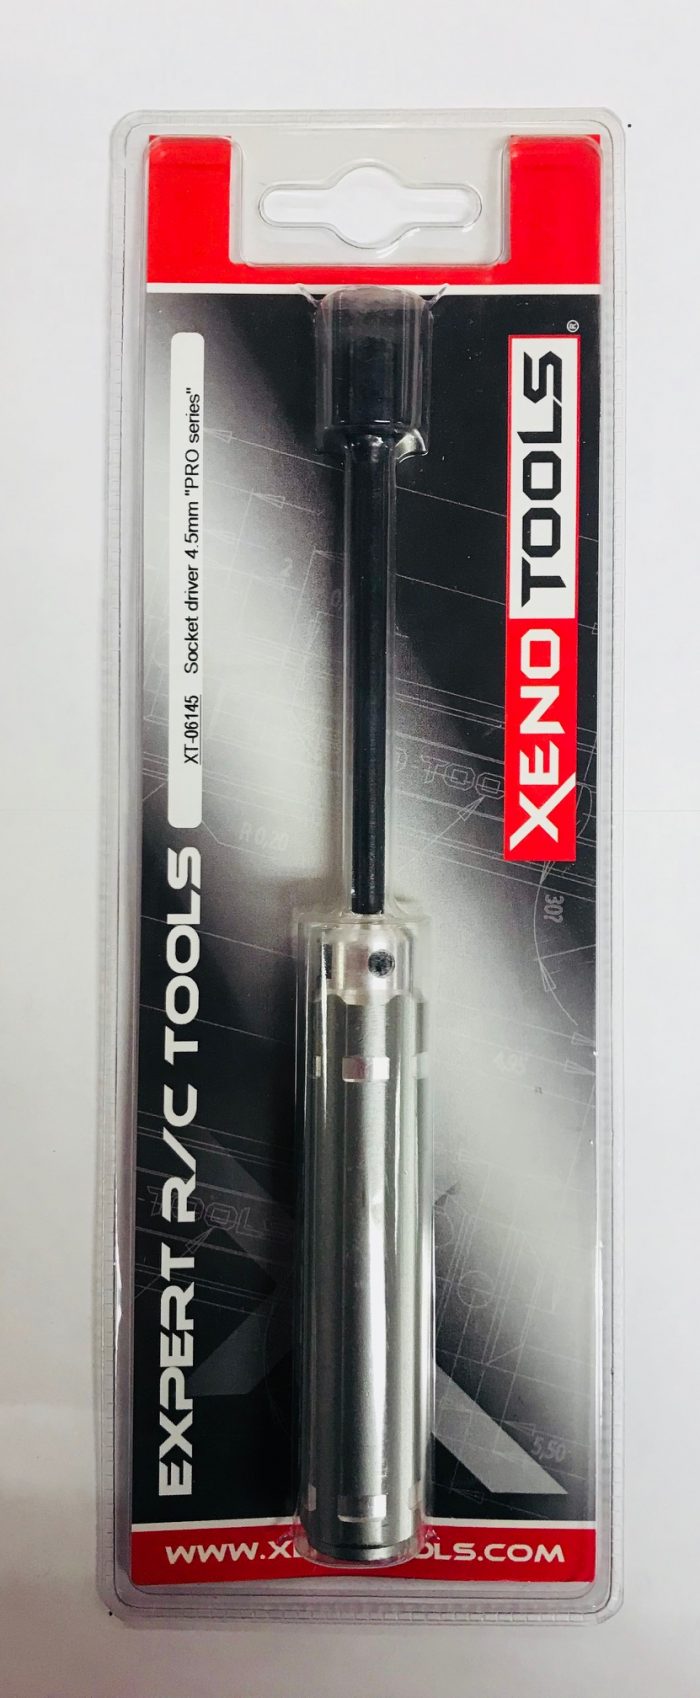 XENO SOCKET DRIVER PRO 4.5 MM